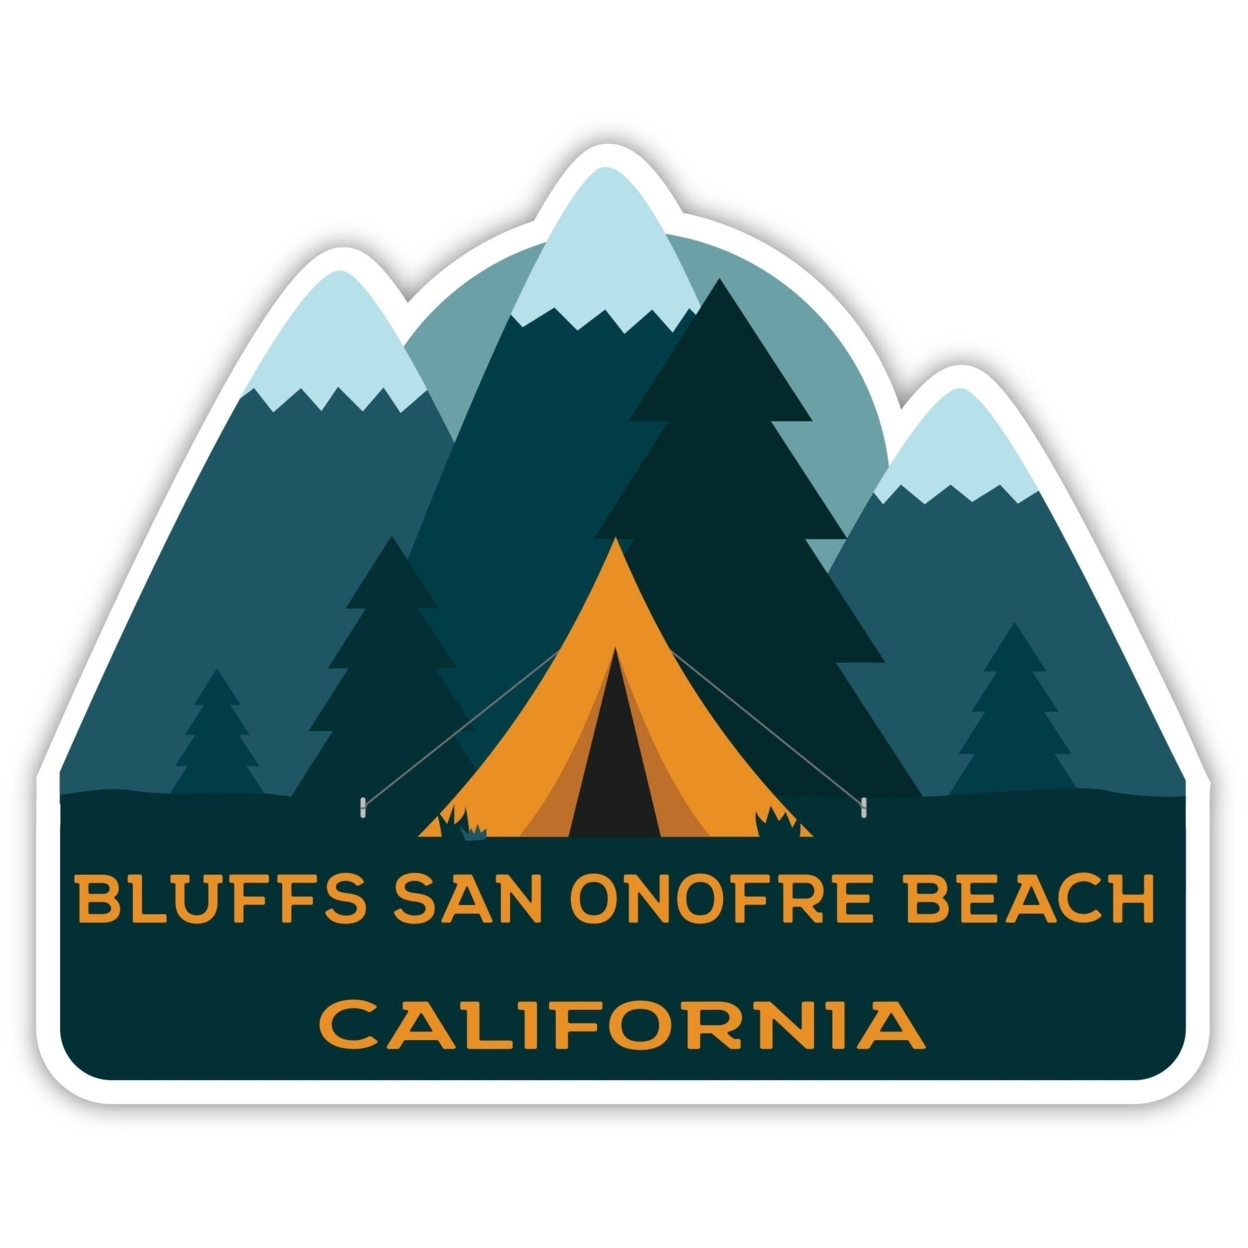 Bluffs San Onofre Beach California Souvenir Decorative Stickers (Choose Theme And Size) - Single Unit, 6-Inch, Adventures Awaits